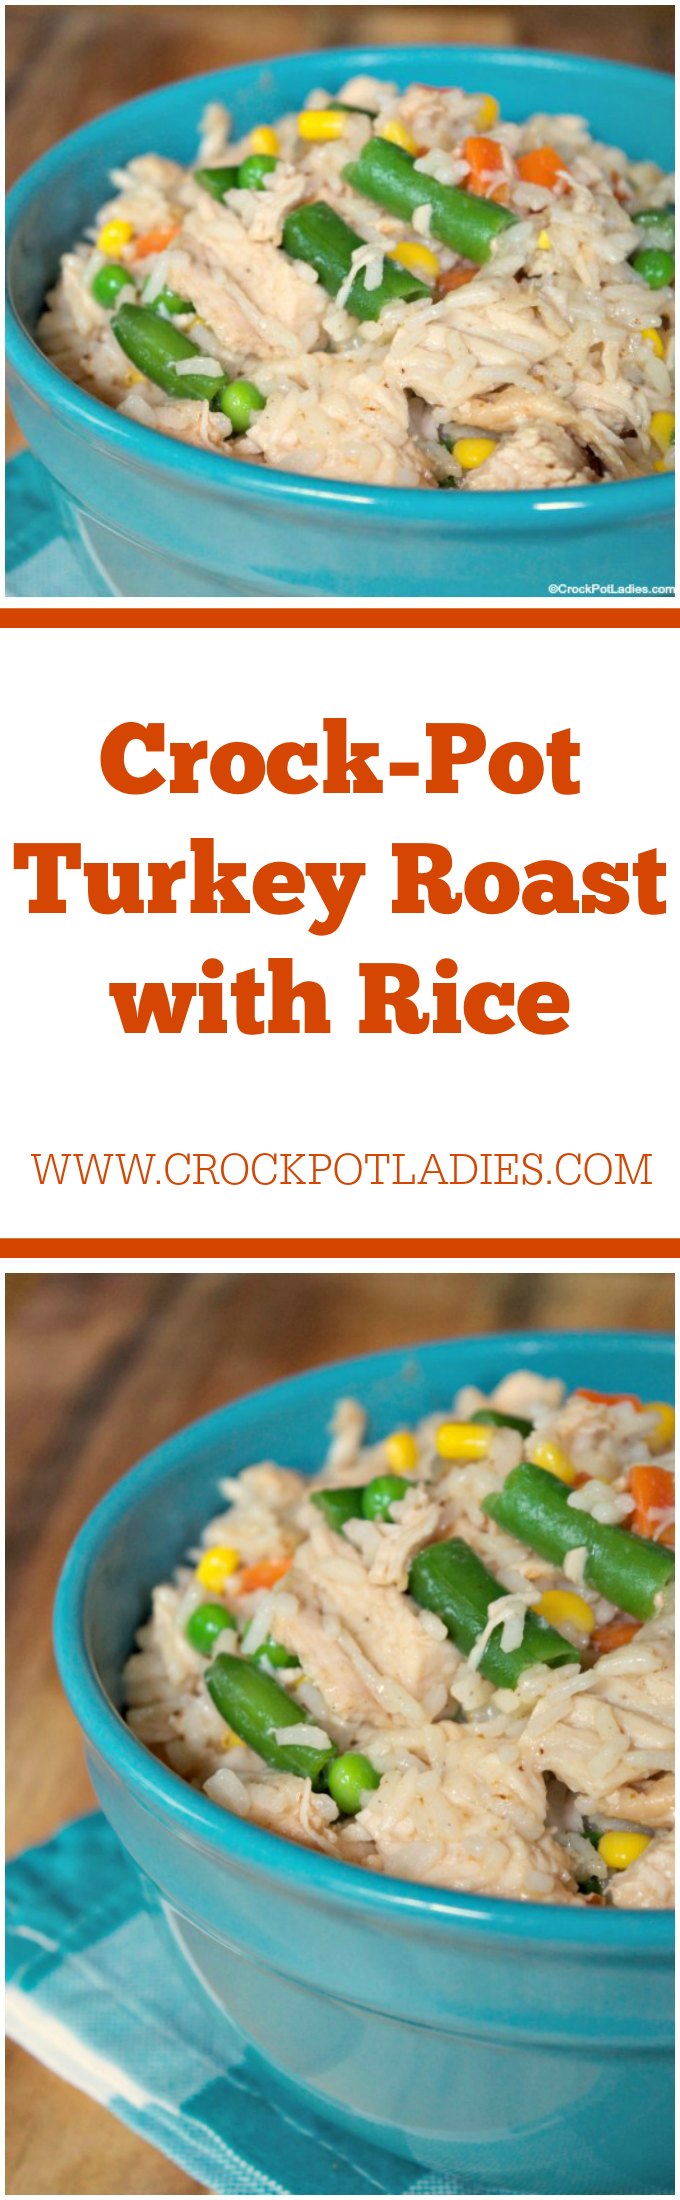 Crock-Pot Turkey Roast with Rice